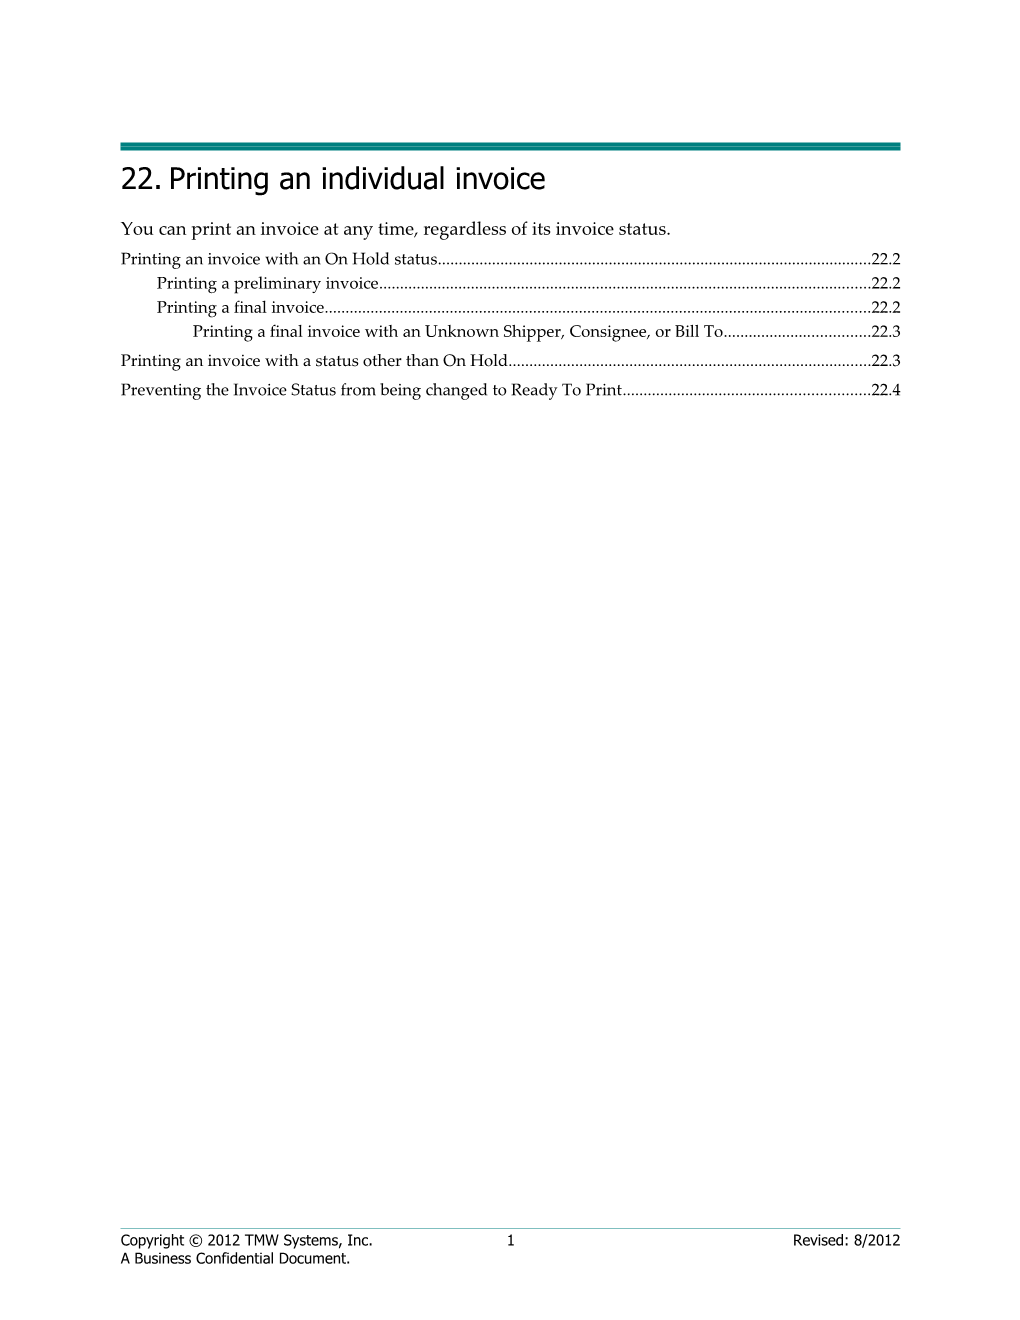 Printing an Individual Invoice